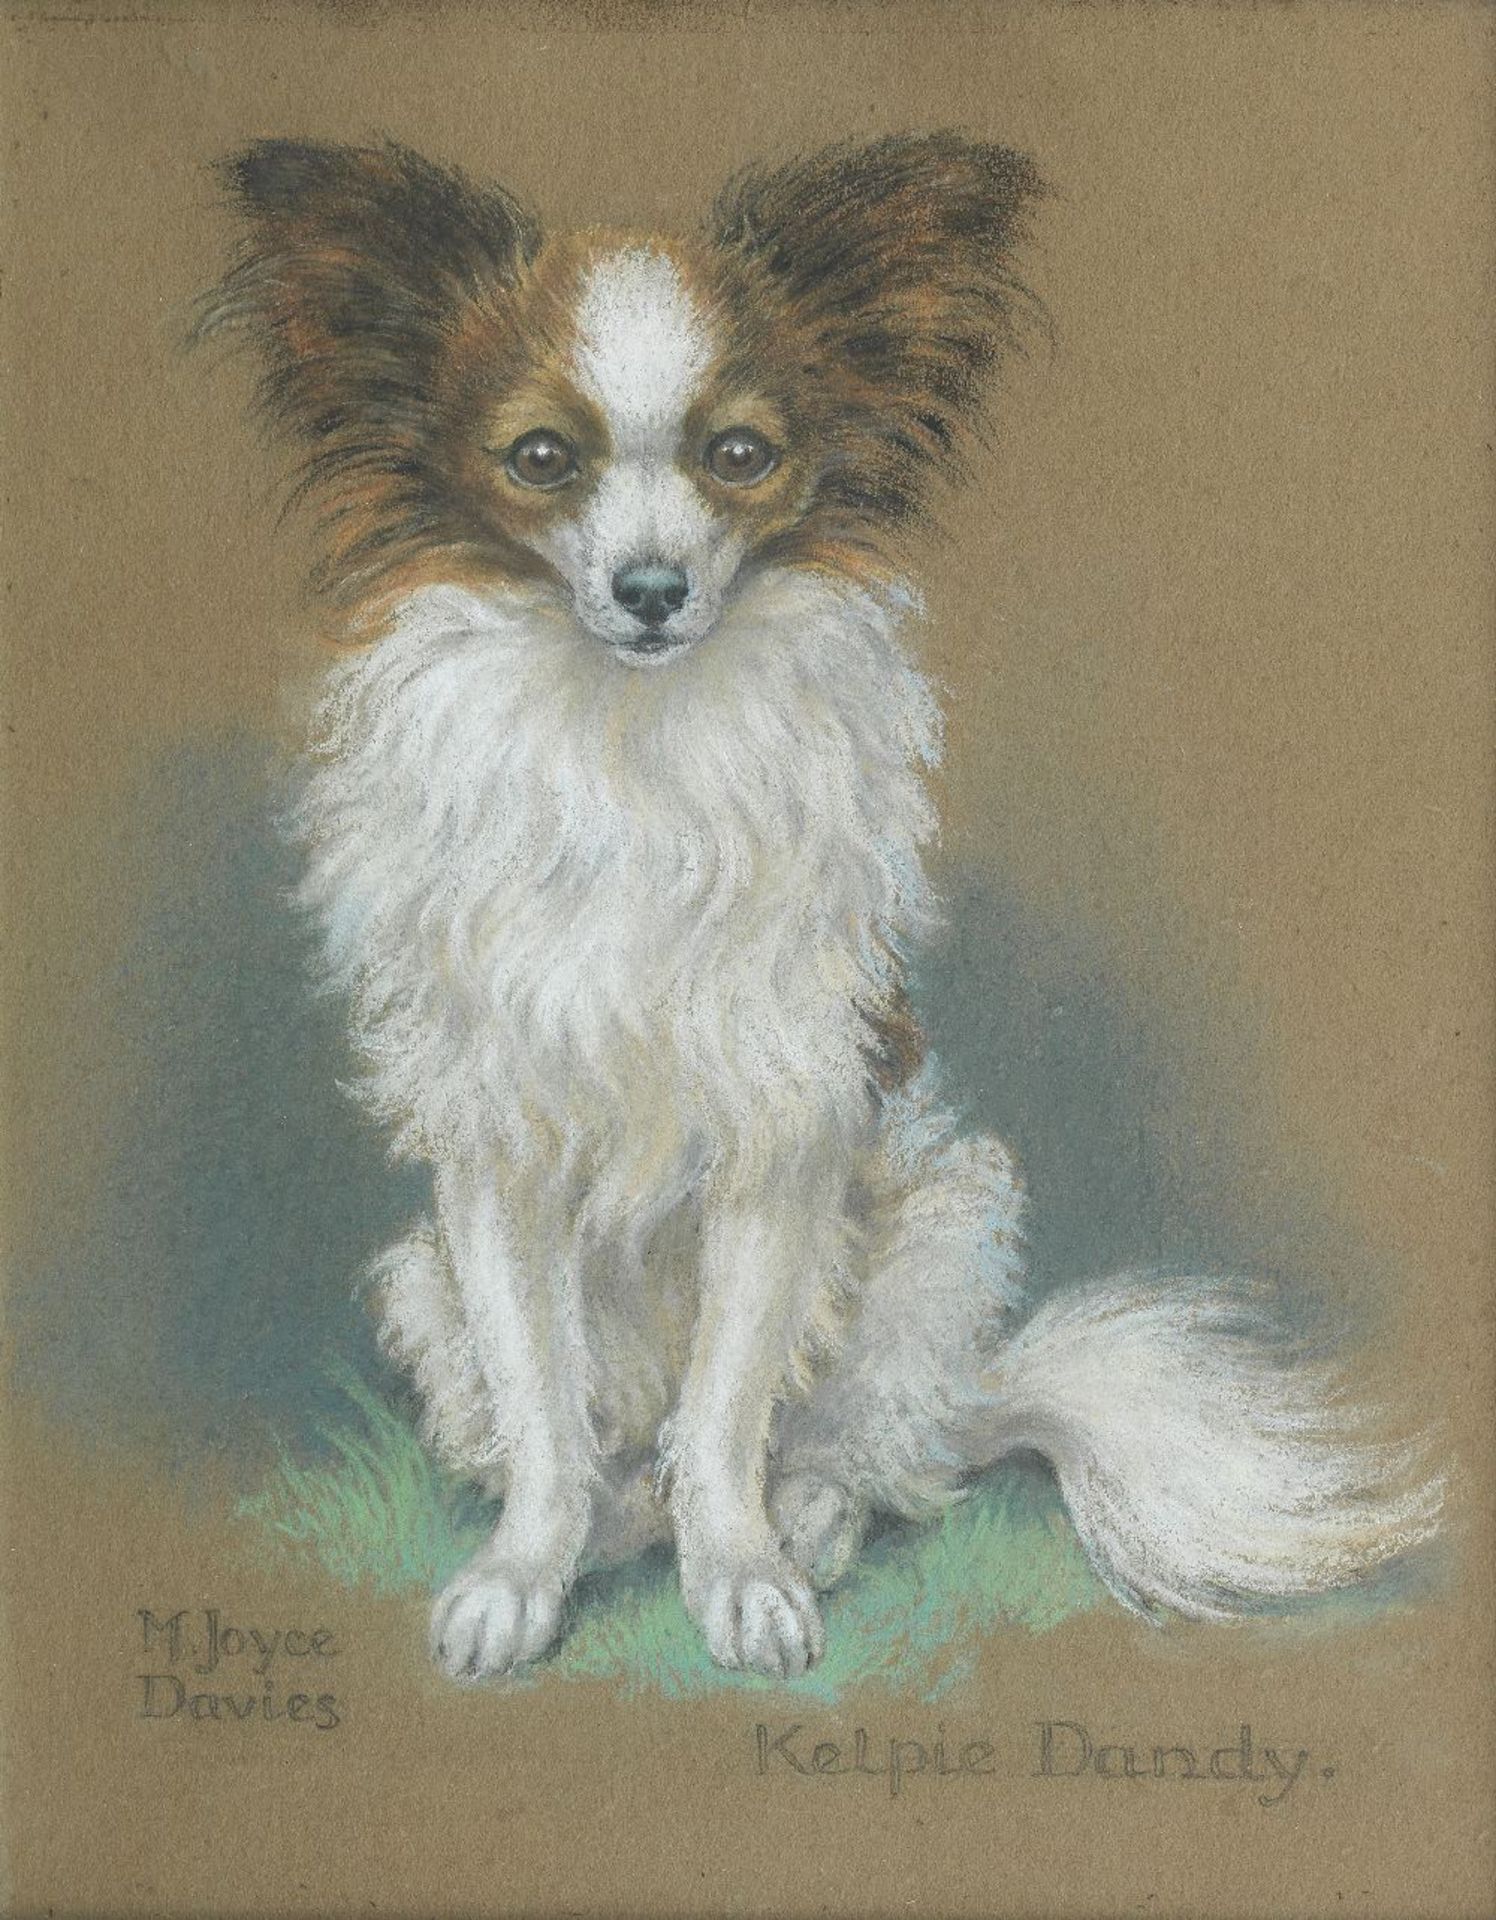 M. Joyce Davies (British, 19th/20th Century) 'Kelpie Dandy'